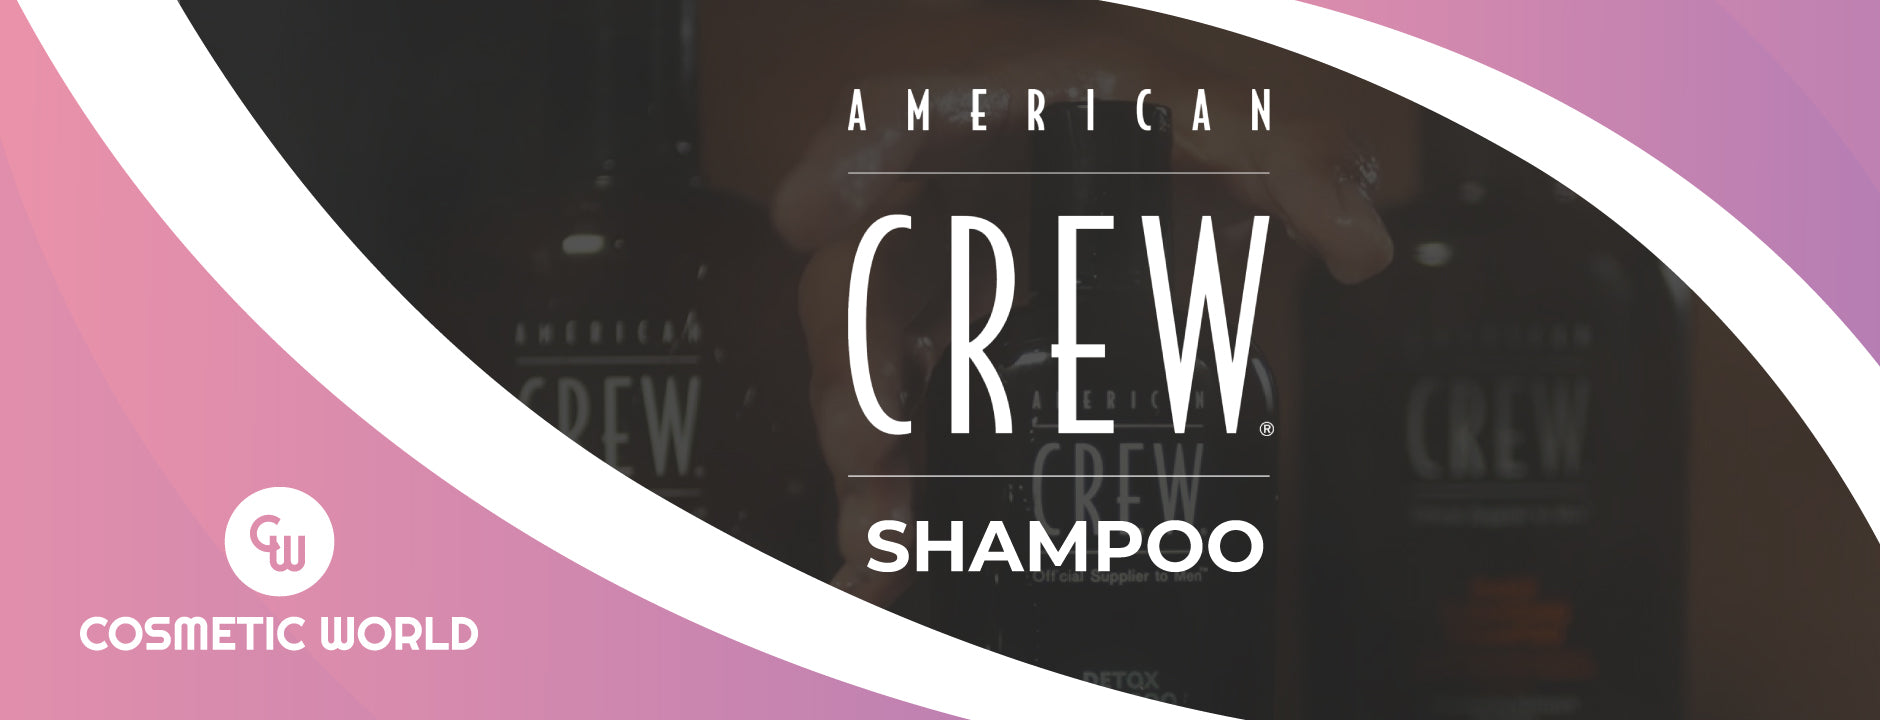 Cosmetic American Crew | Shampoo World